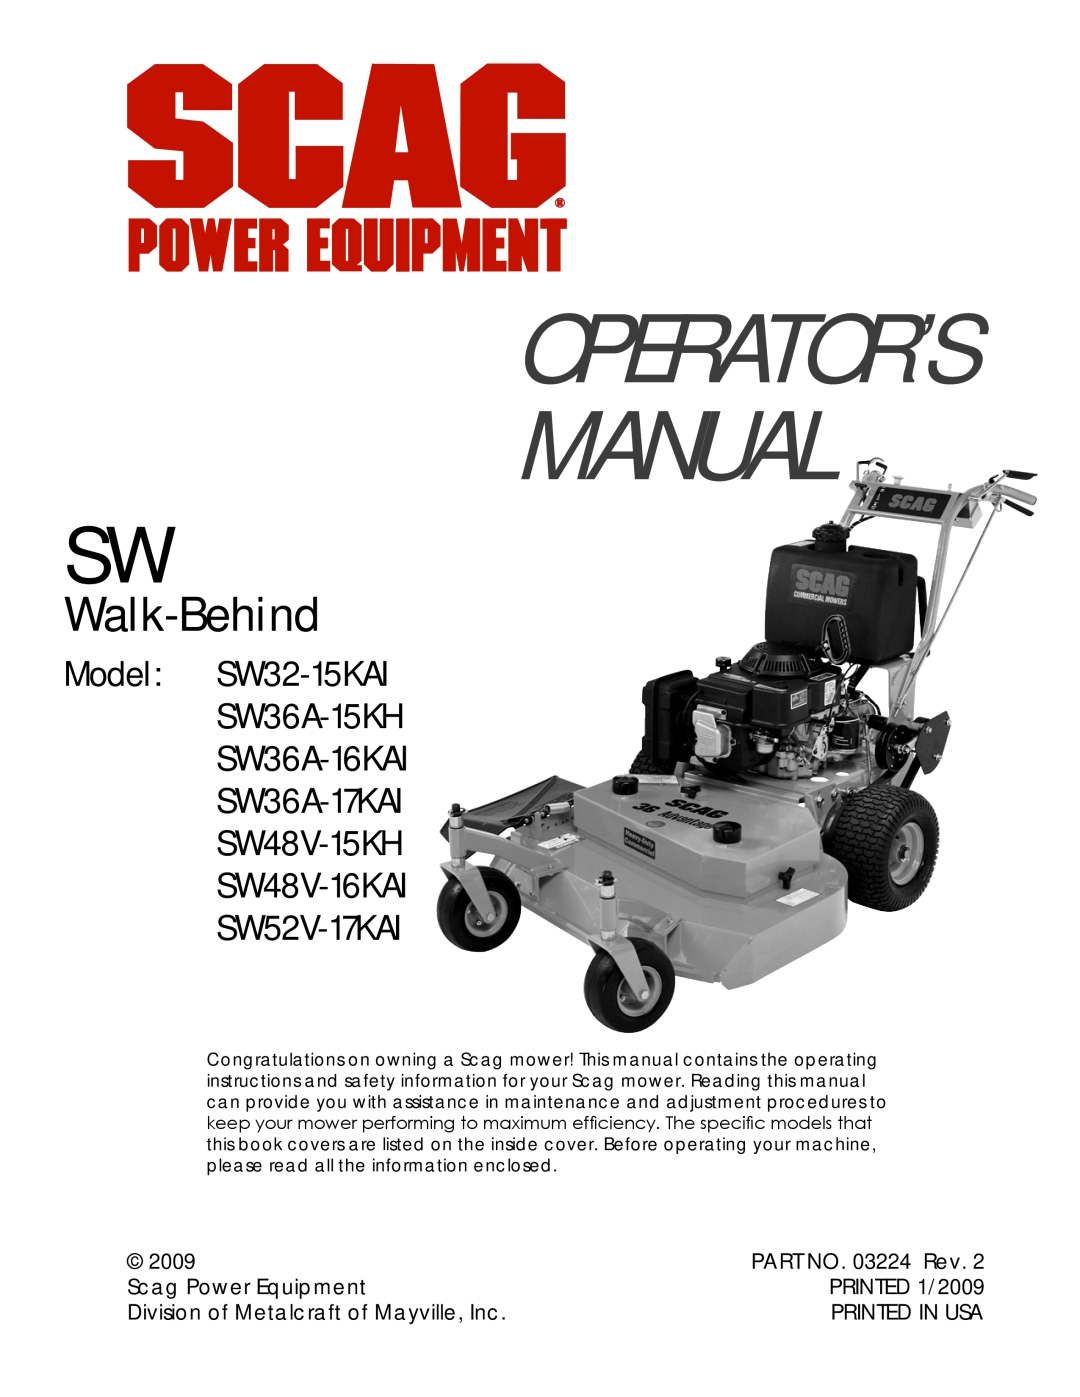 Scag Power Equipment manual Operator’S Manual, Walk-Behind, SW48V-16KAI SW52V-17KAI, 2009, PART NO. 03224 Rev 